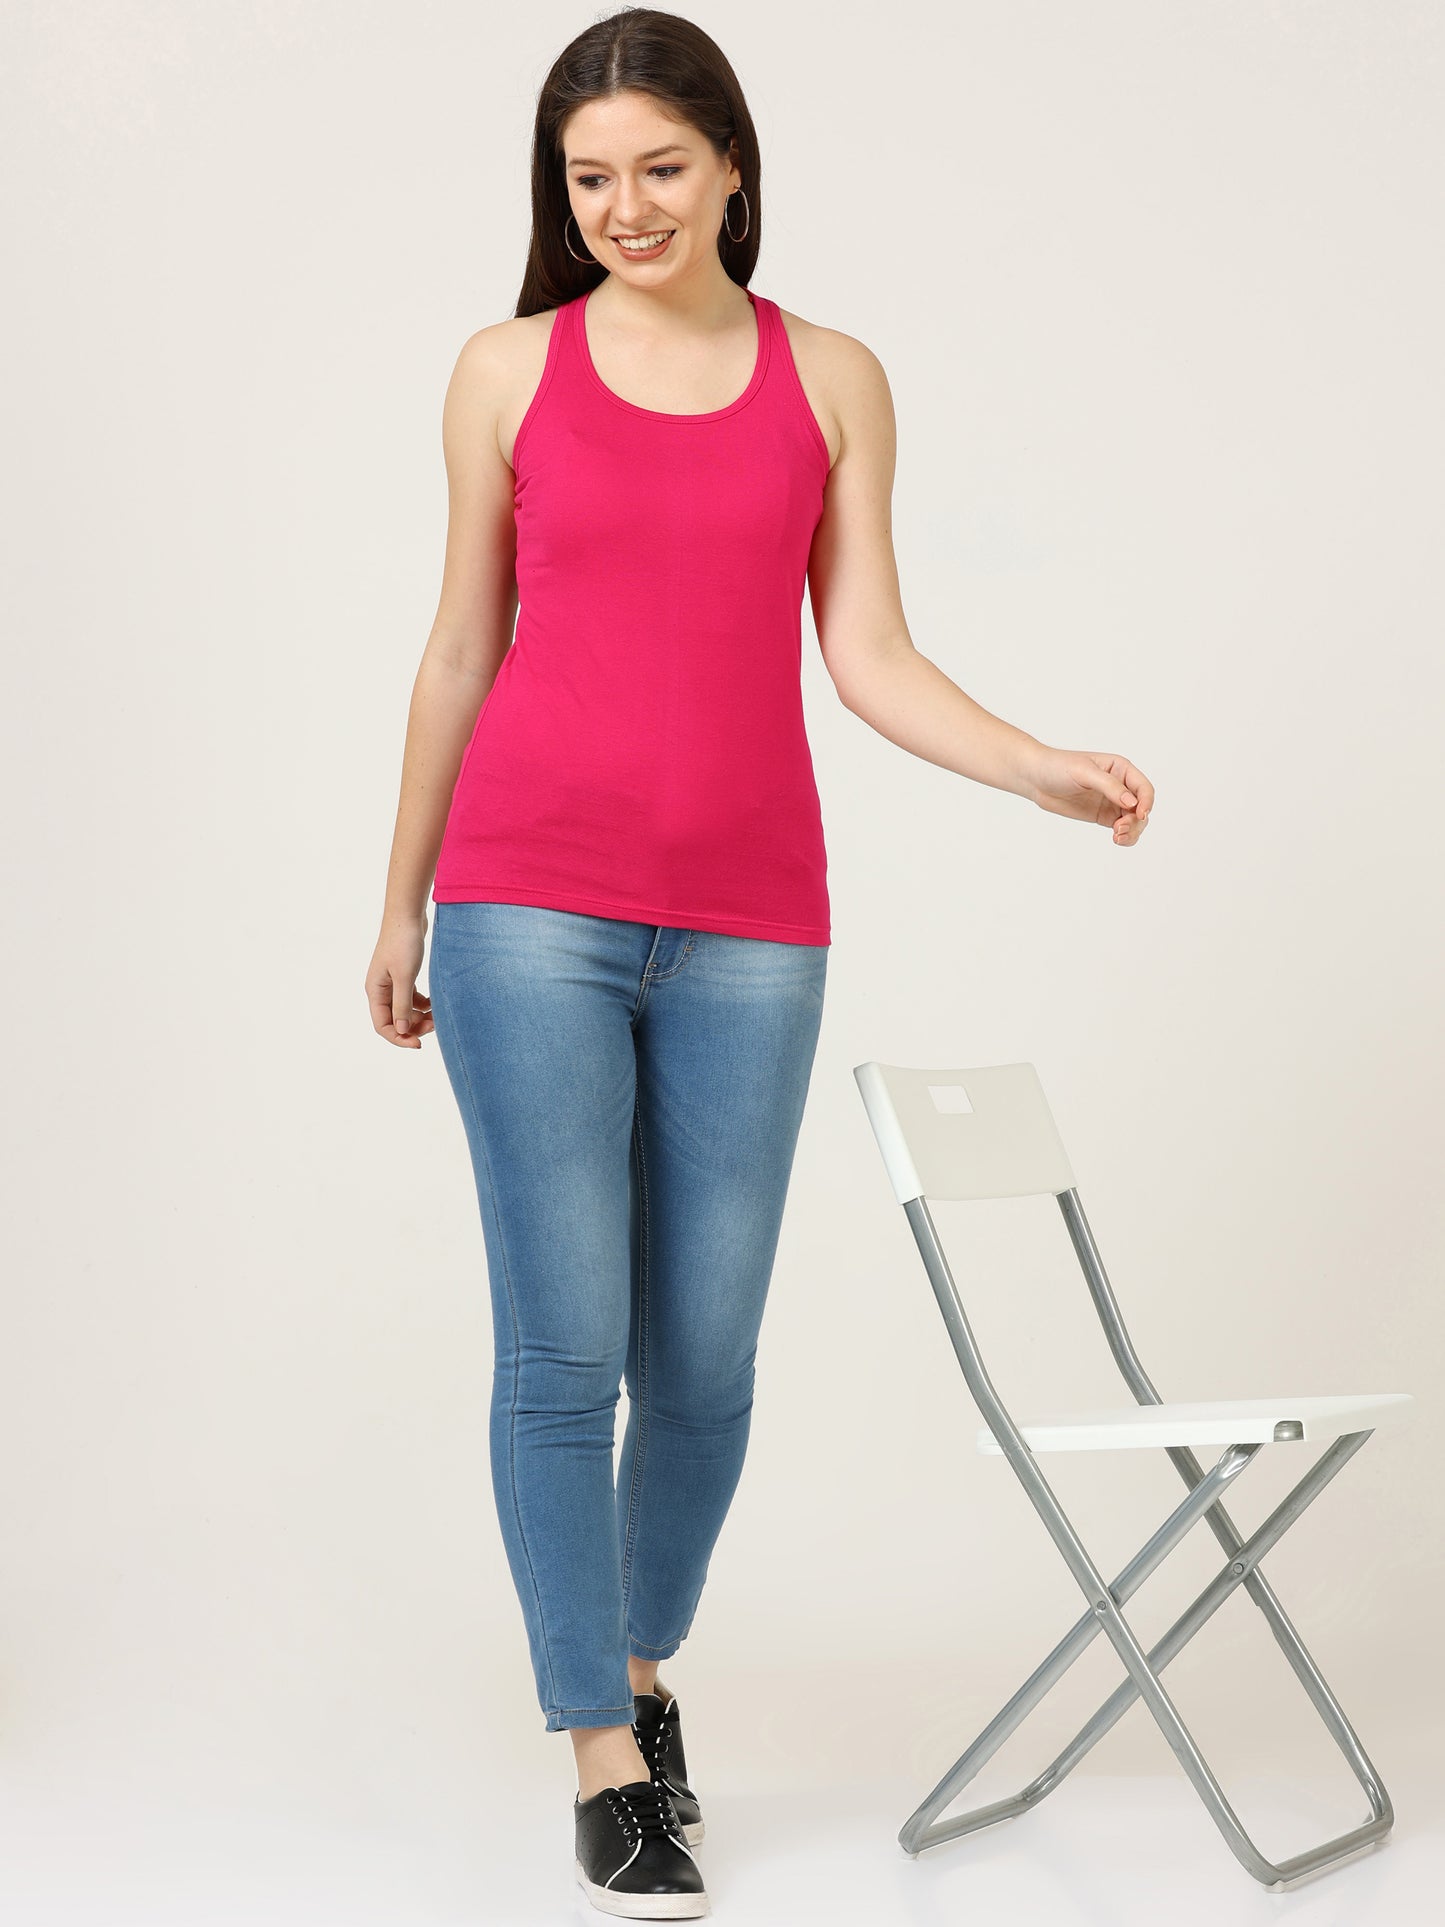 Women's Cotton Plain Sleeveless Pink Color Top